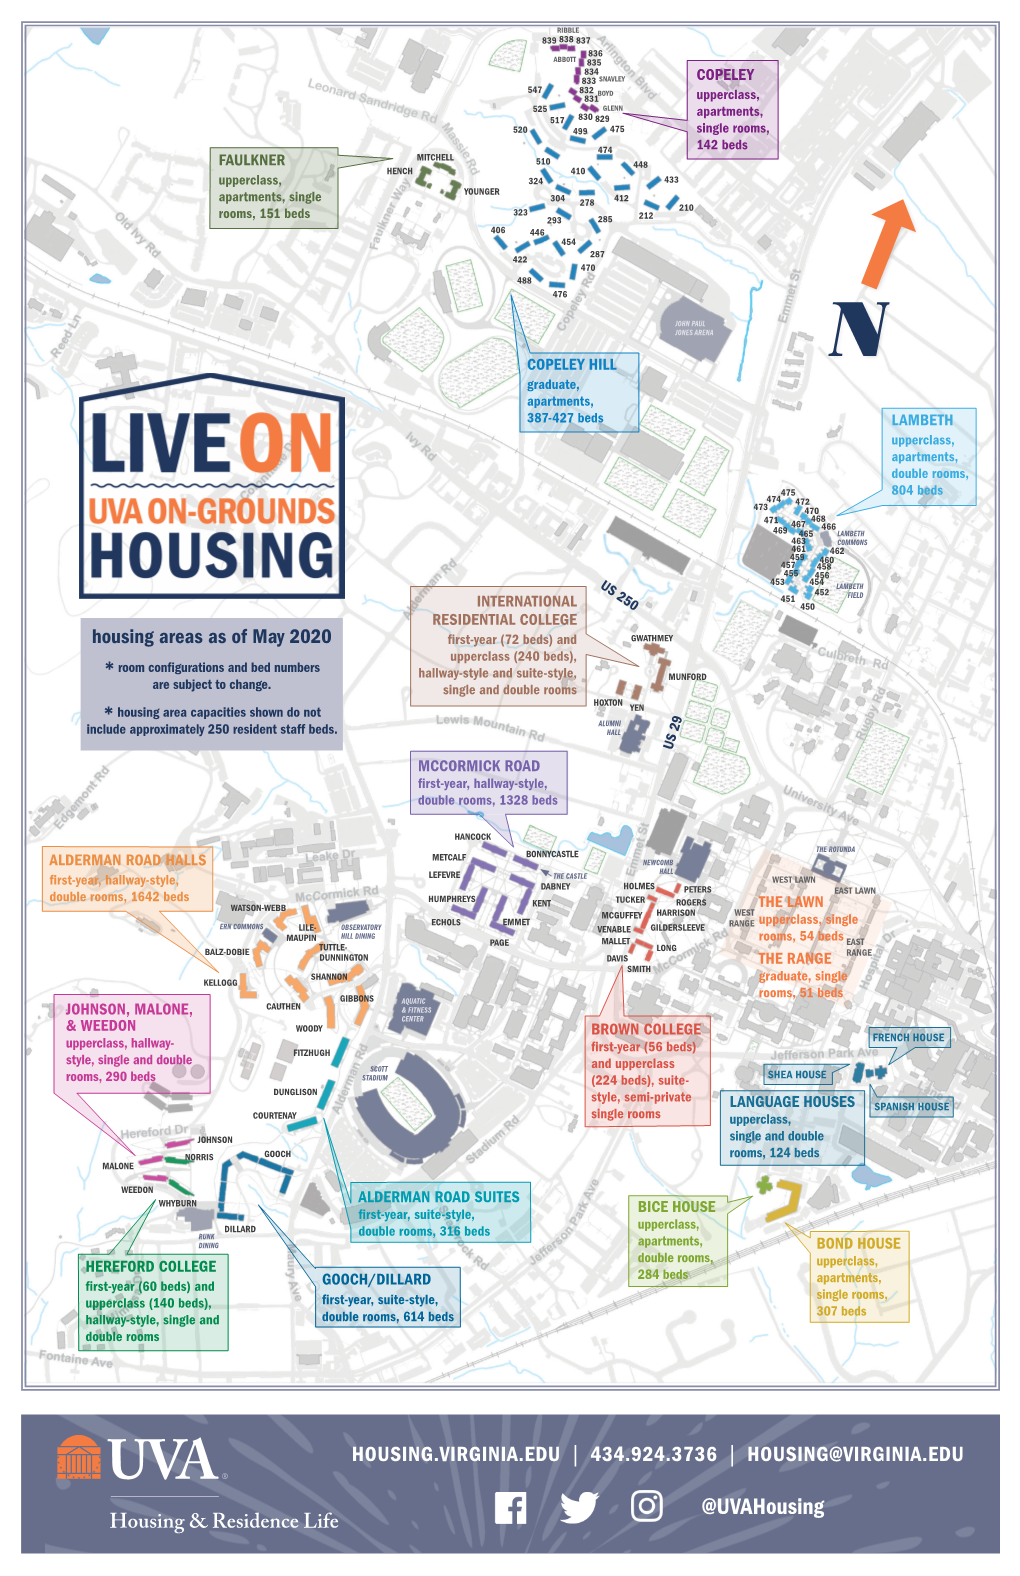 @Uvahousing Housing & Residence Life